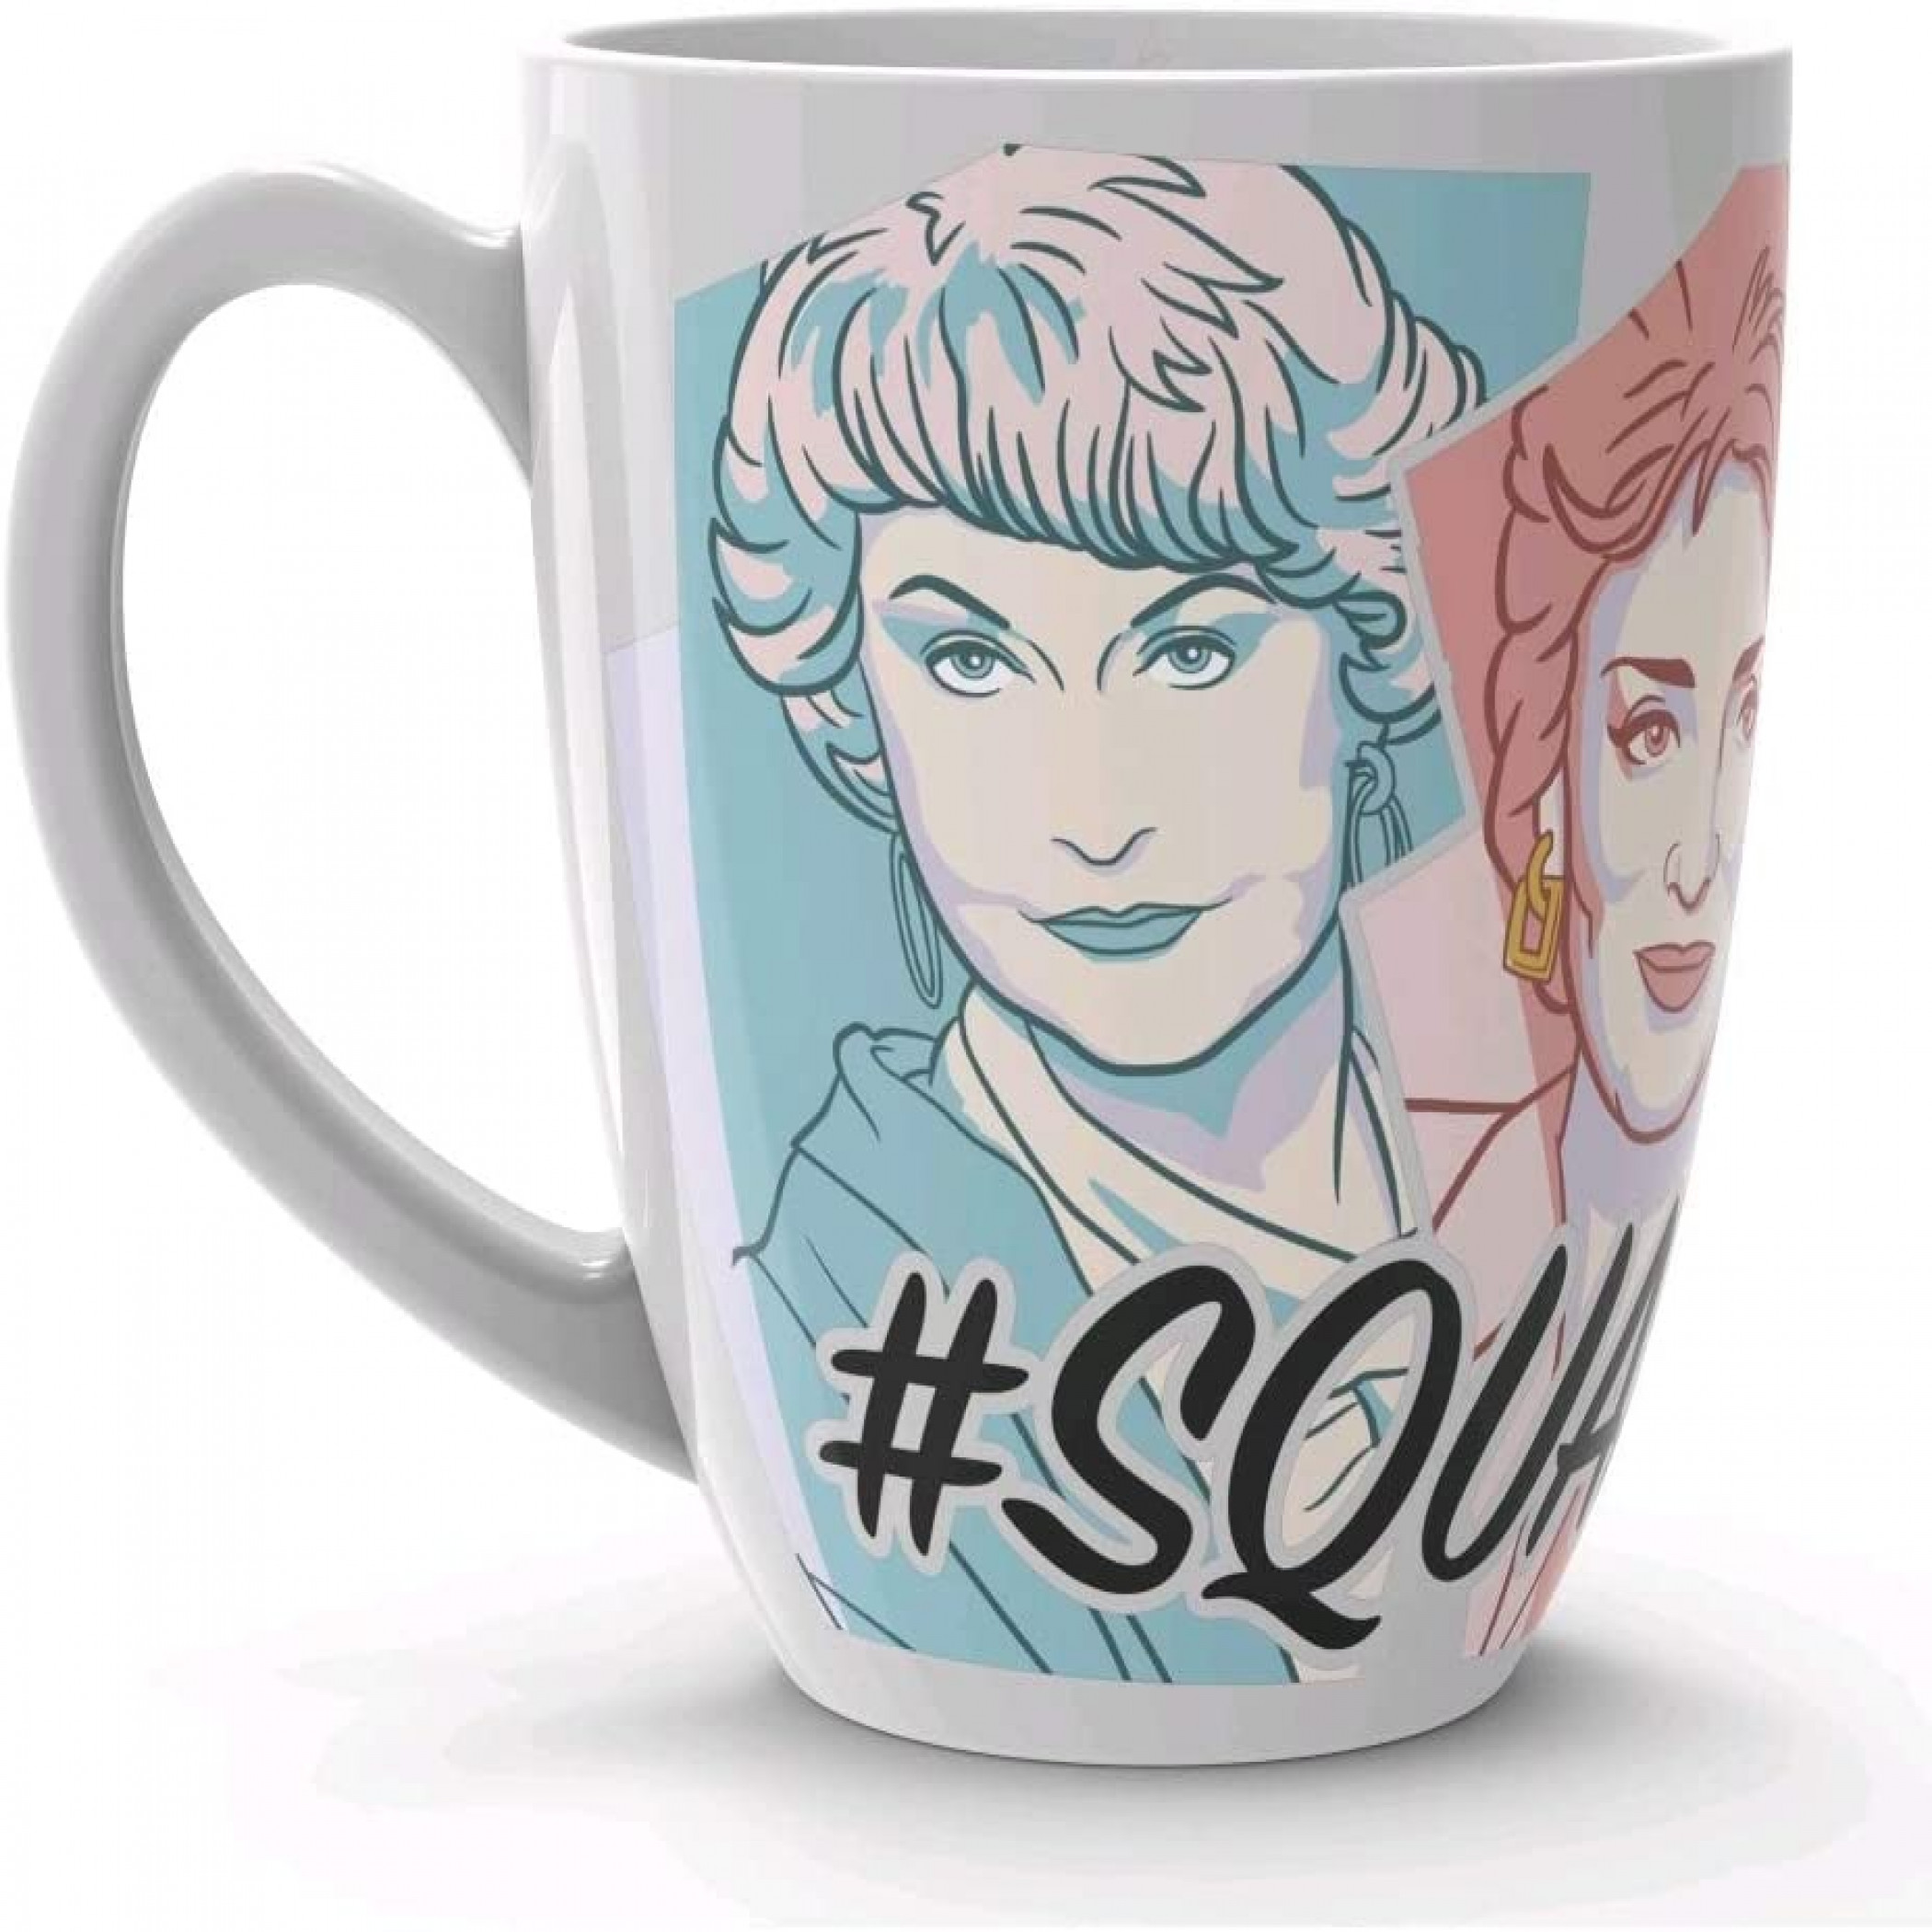 Golden Girls "Squad Goals" Ceramic Mug